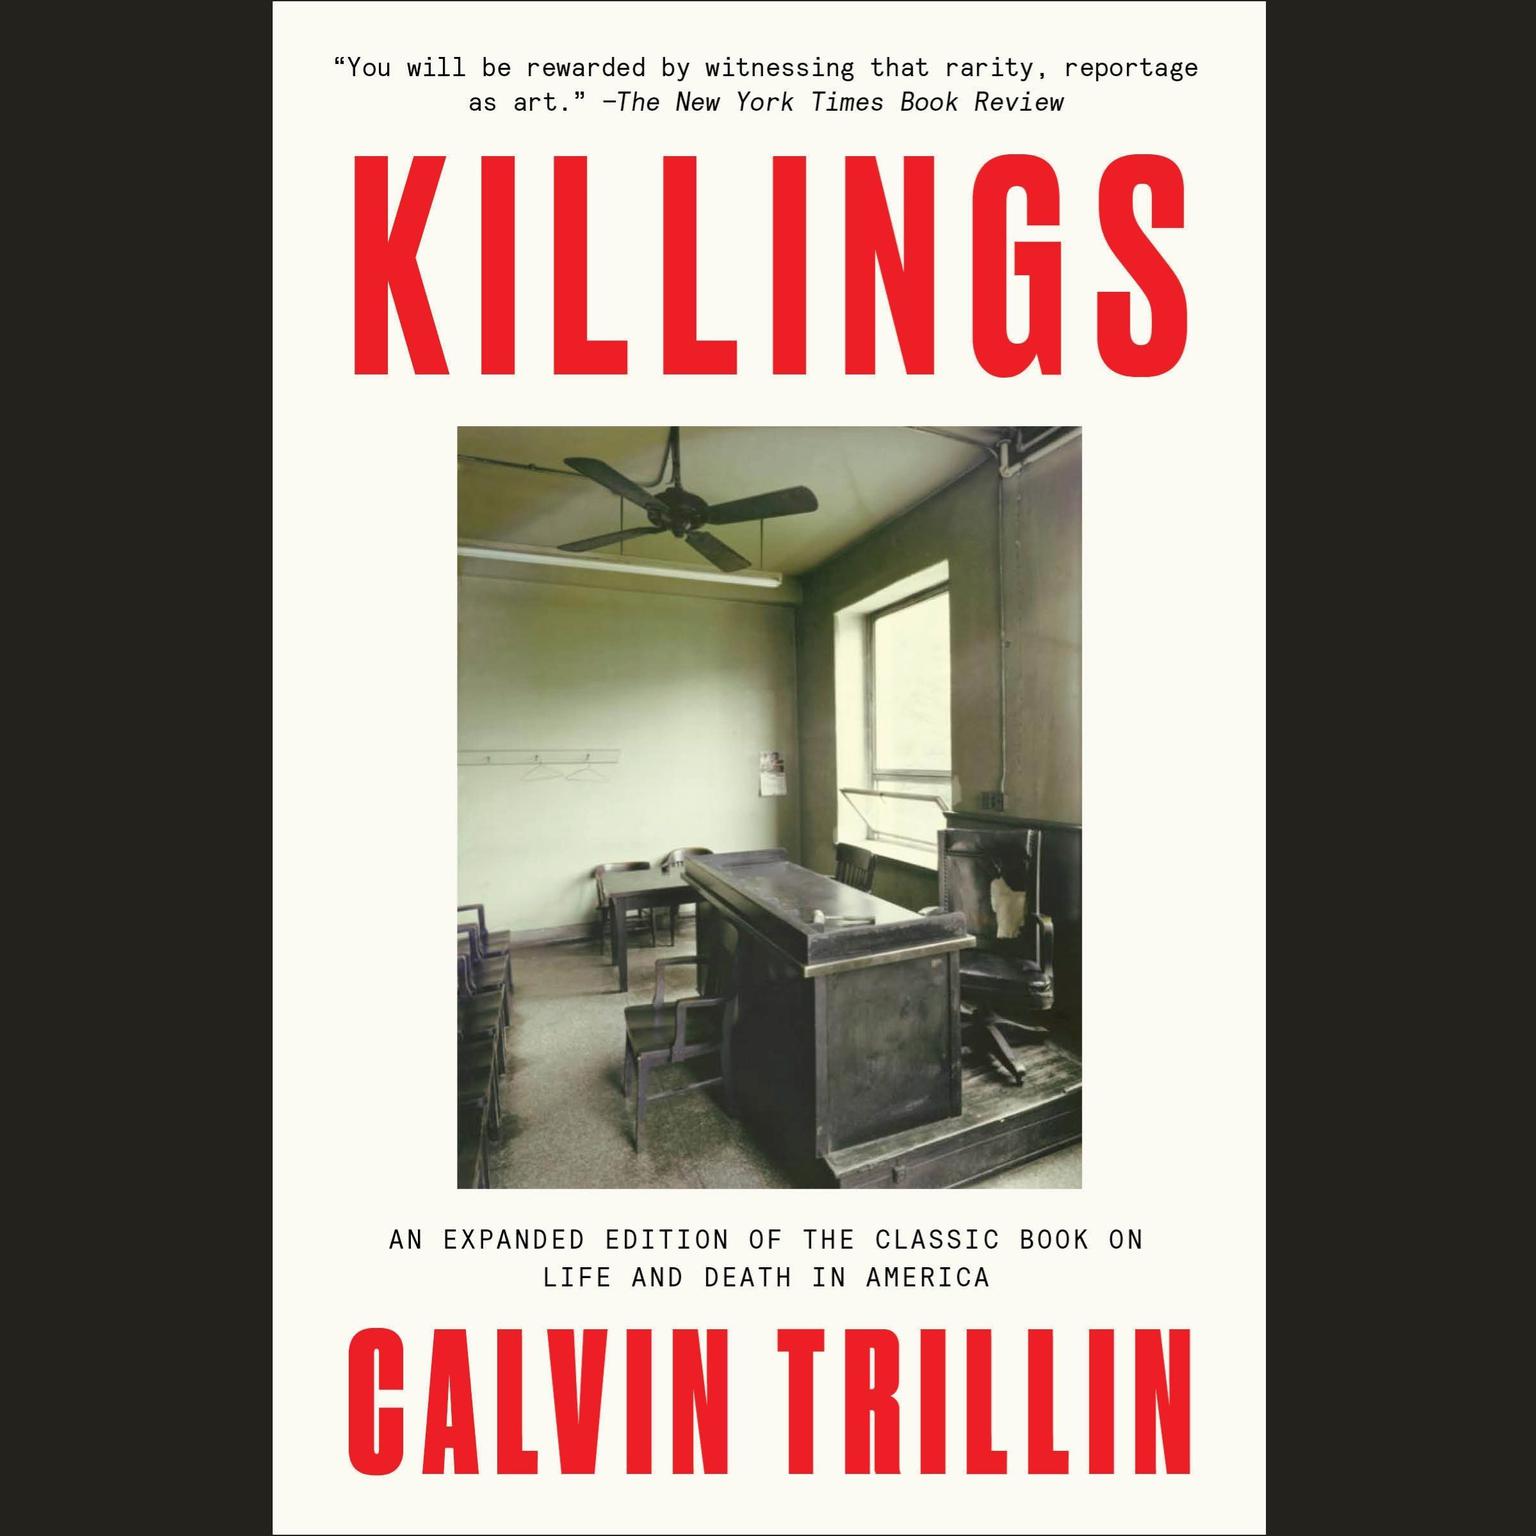 Killings Audiobook, by Calvin Trillin